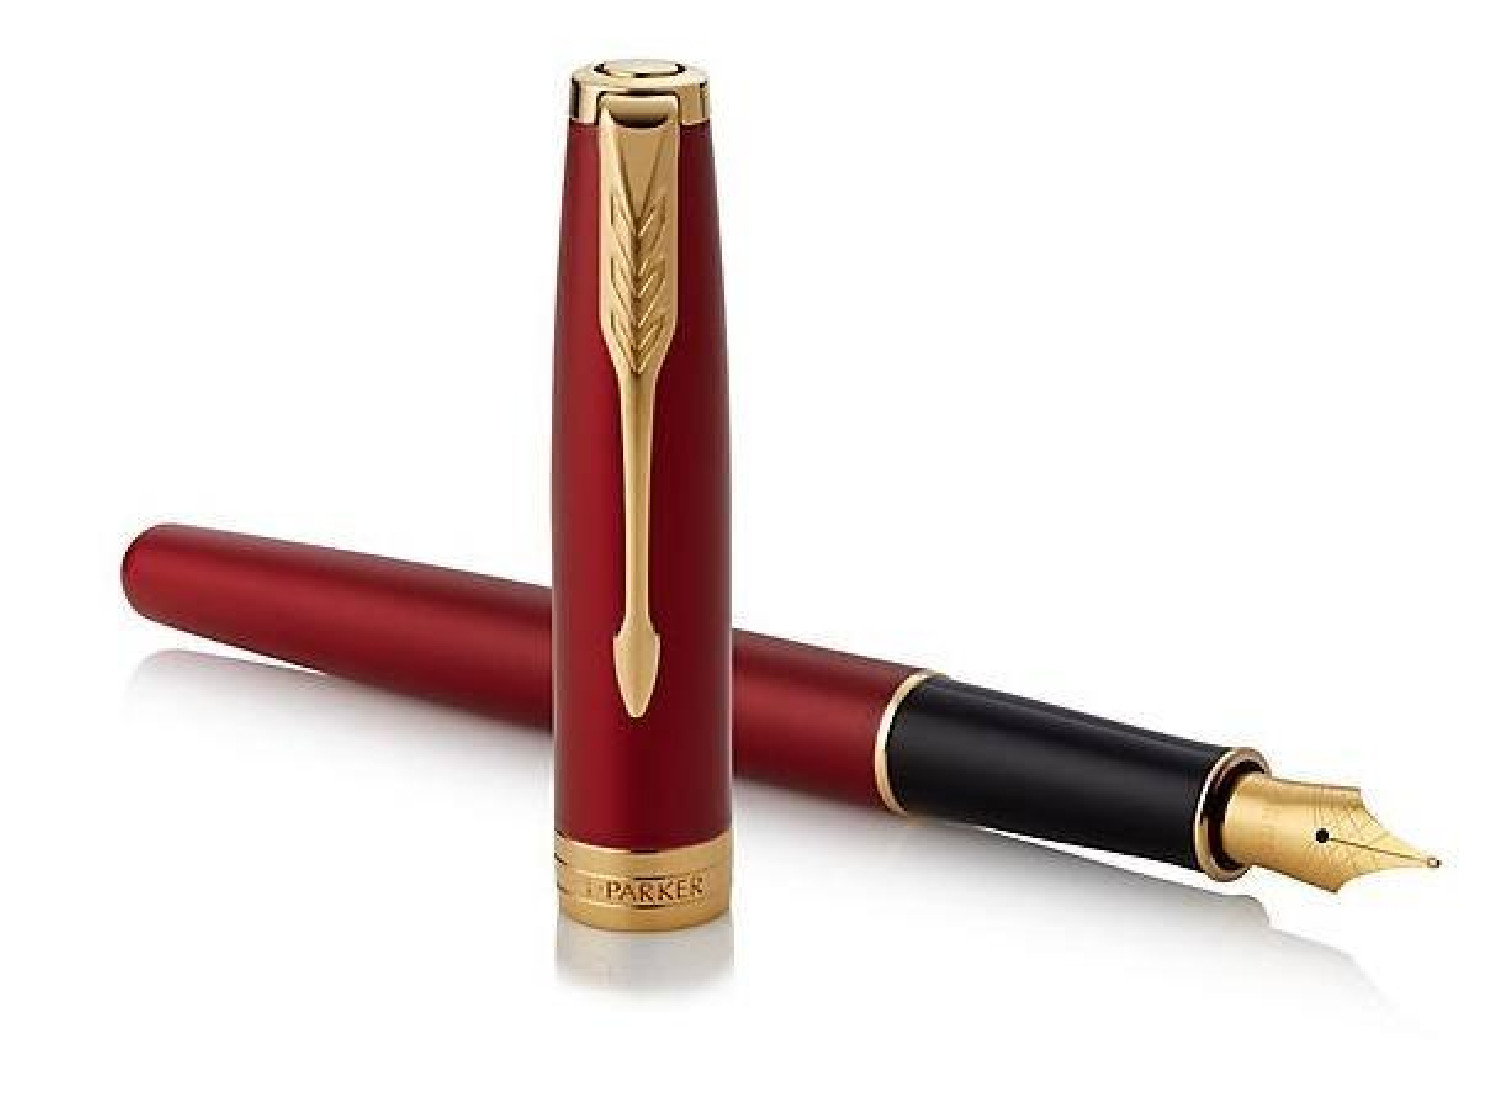 Parker Sonnet Fountain Pen Red Lacquer - Gold Trim Steel Nib